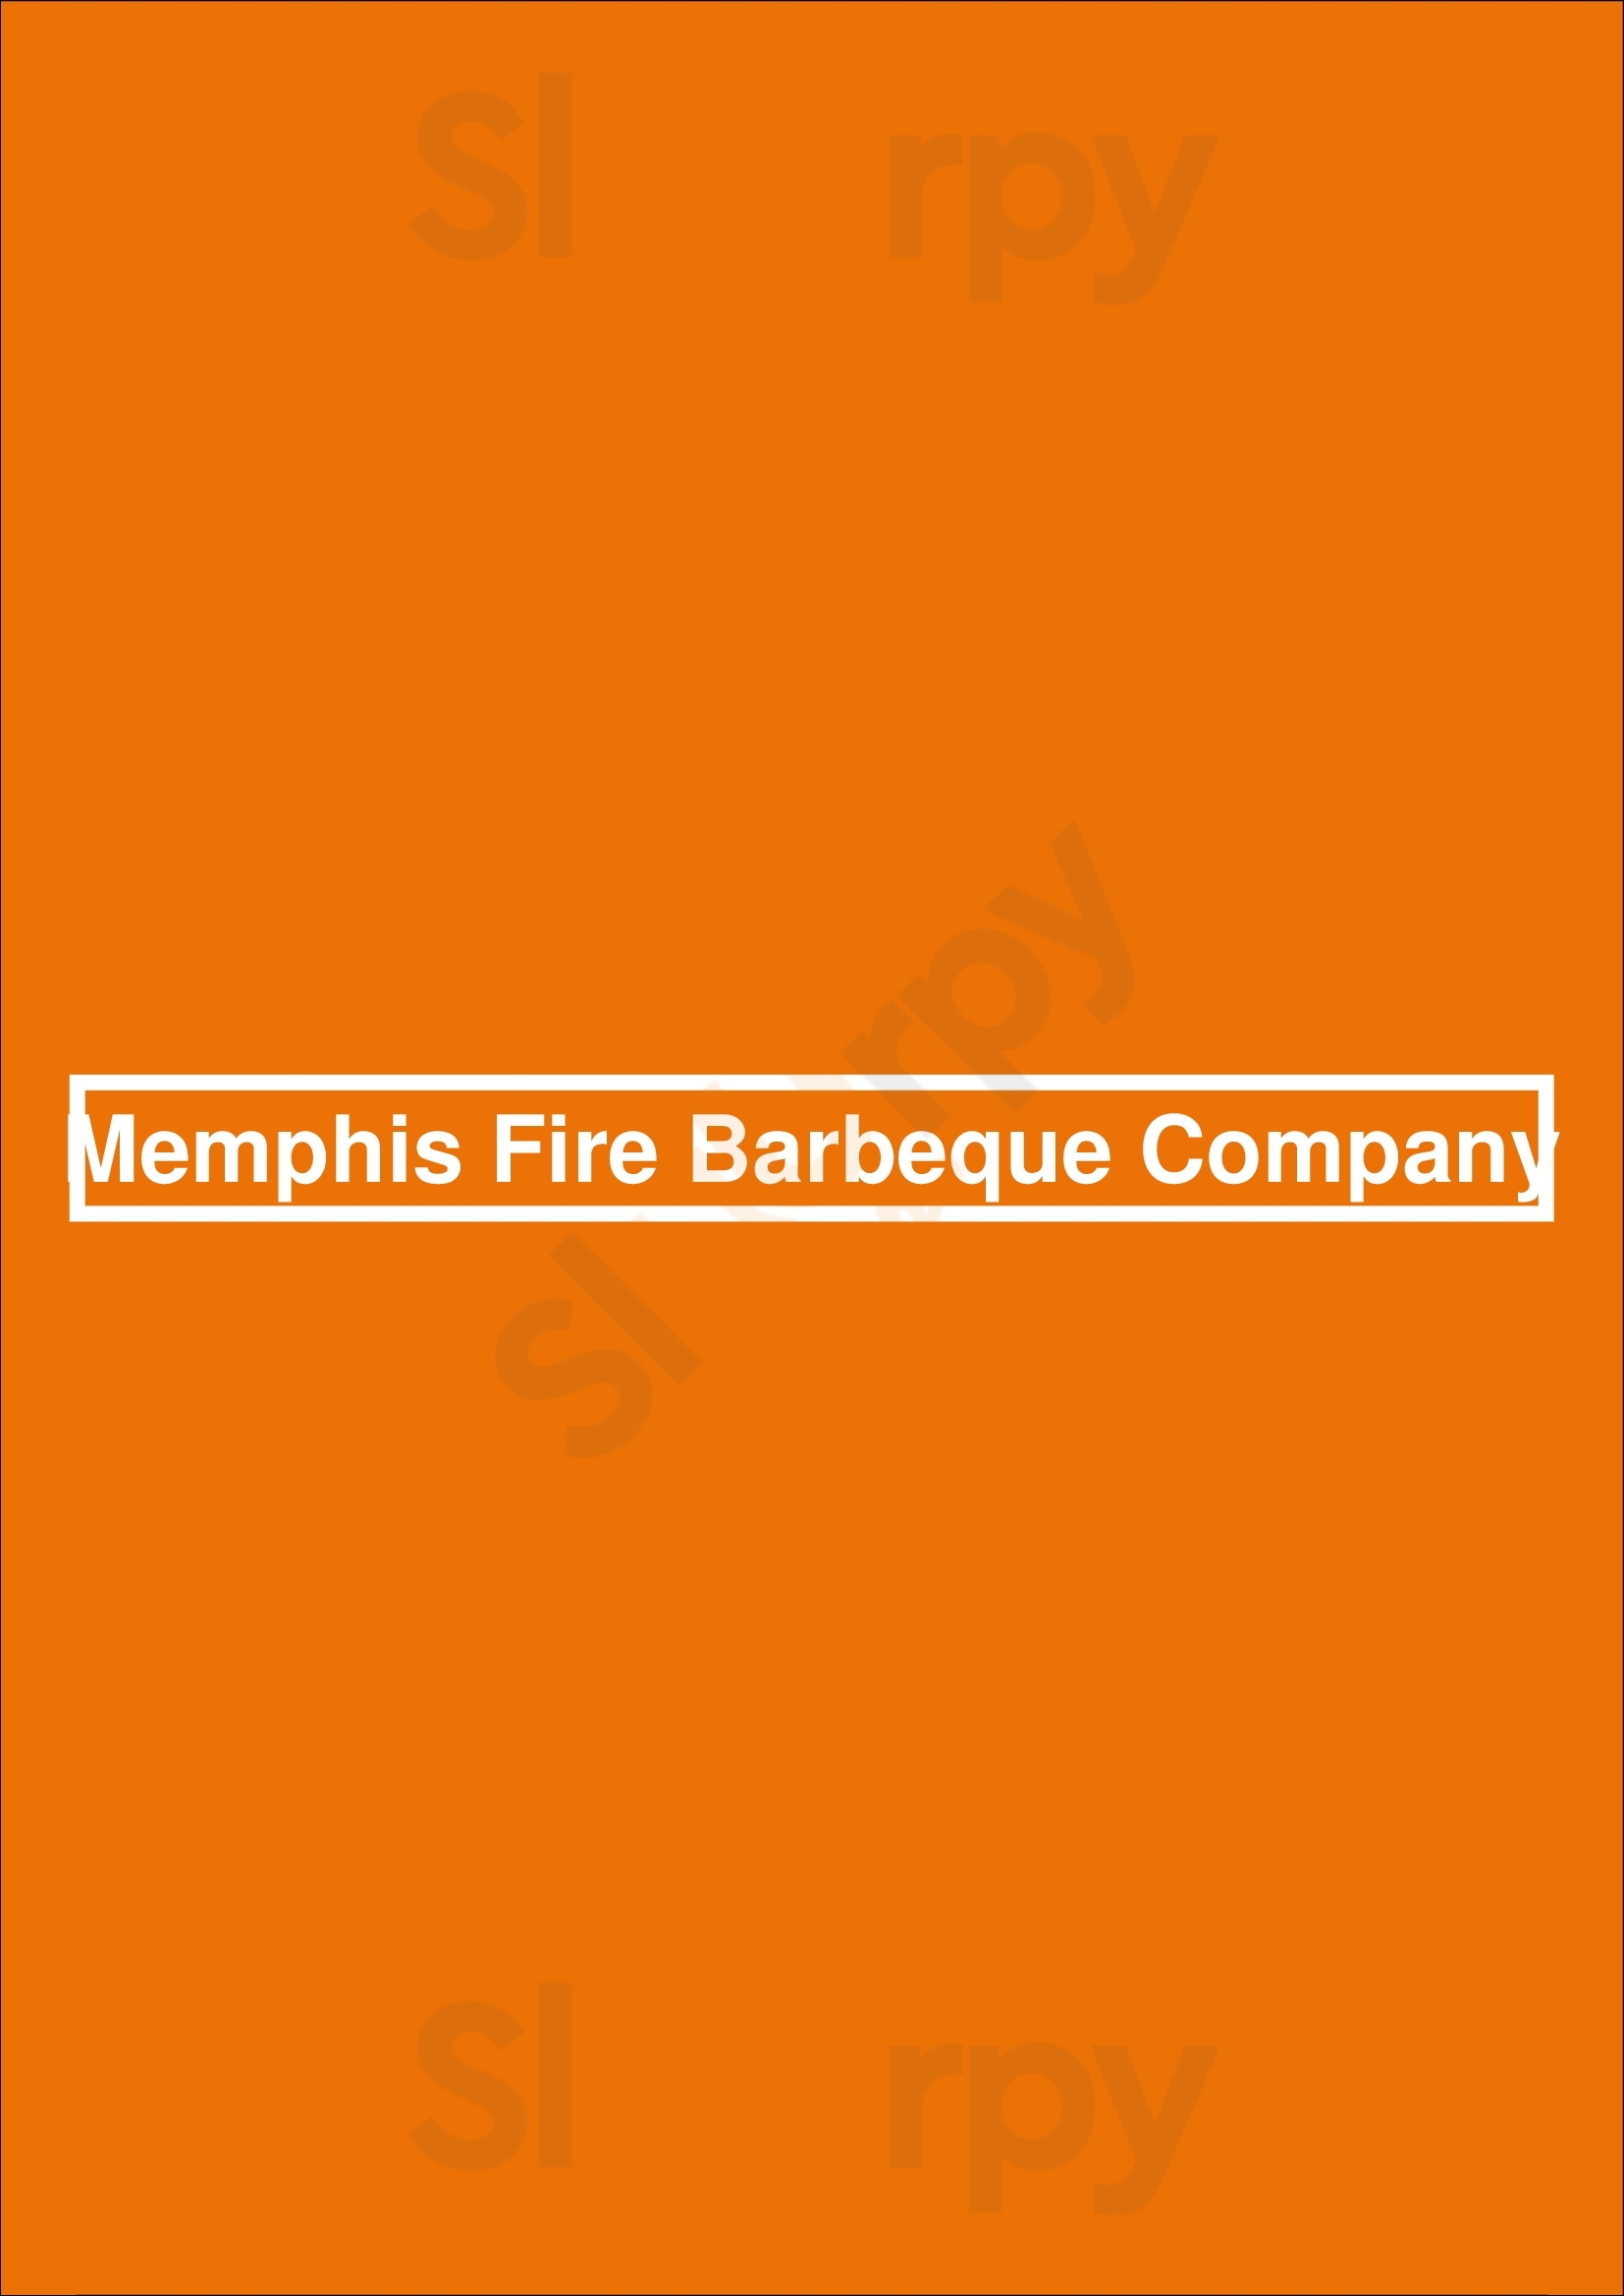 Memphis Fire Barbeque Company Stoney Creek Menu - 1